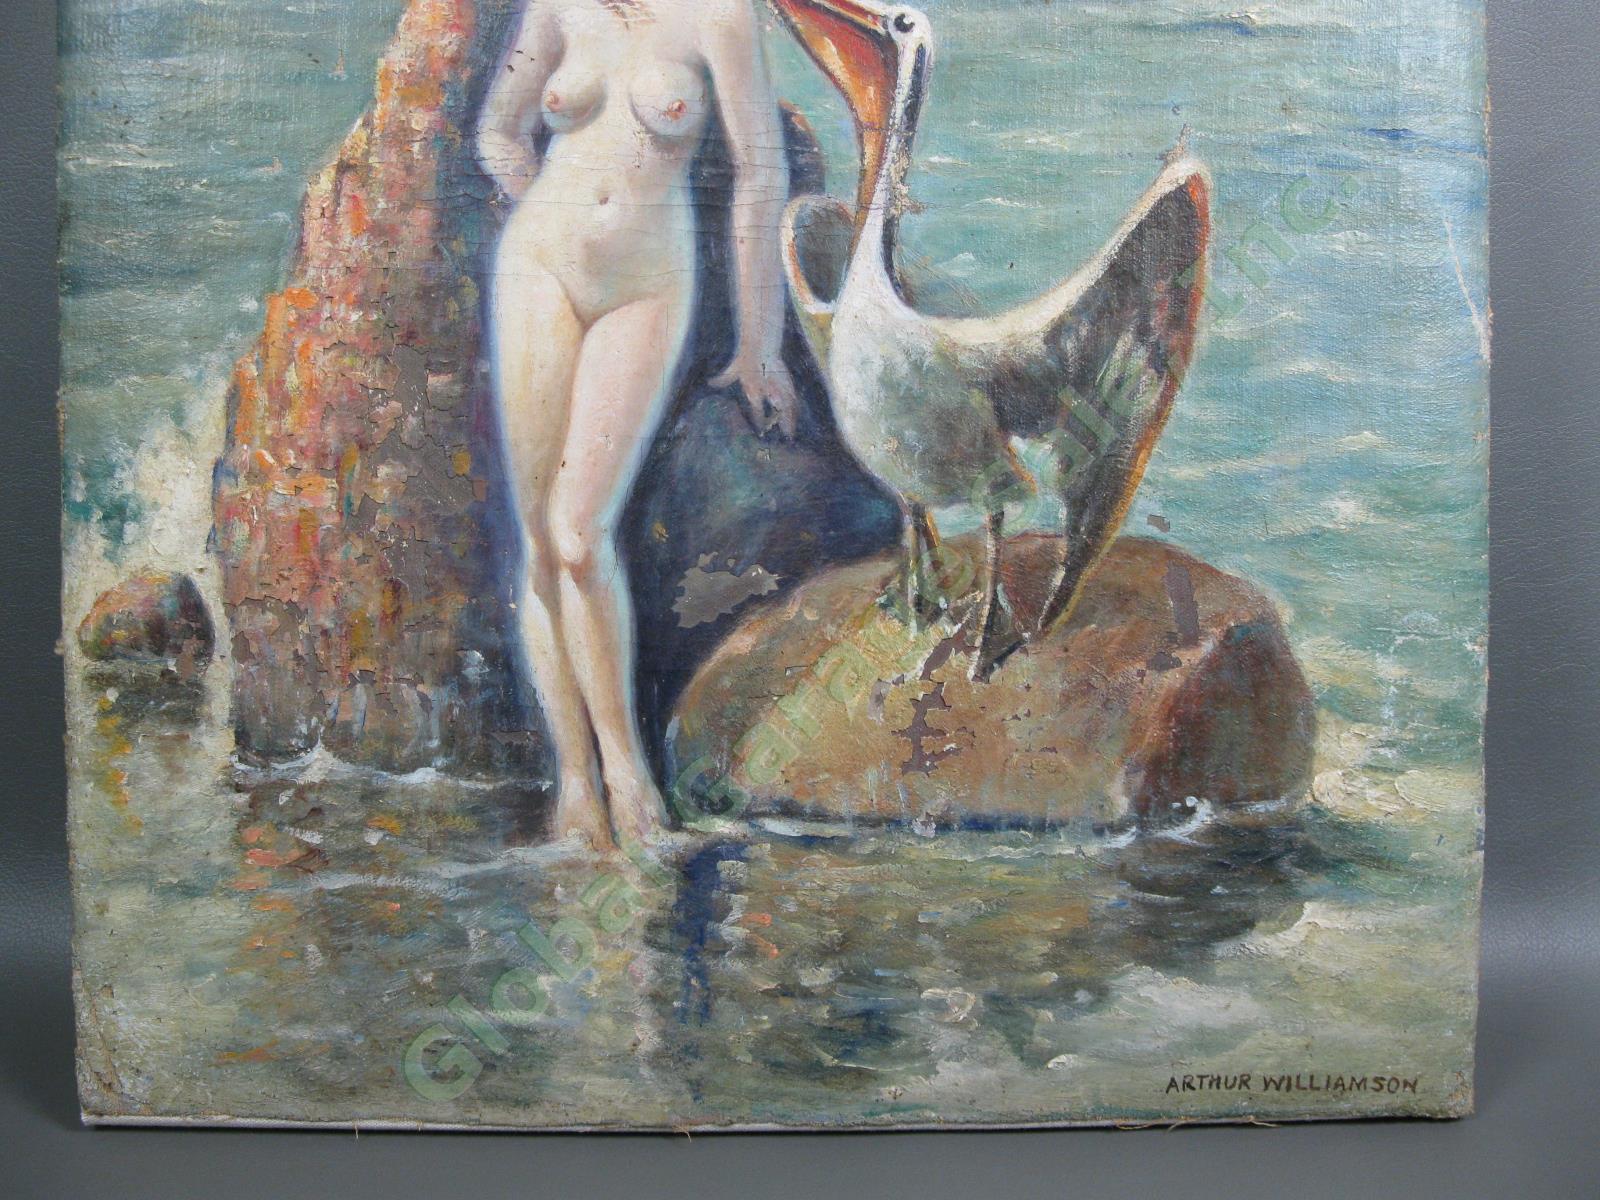 Original Arthur Williamson SECRETS Impressionist Nude Oil Painting Canvas SIGNED 2